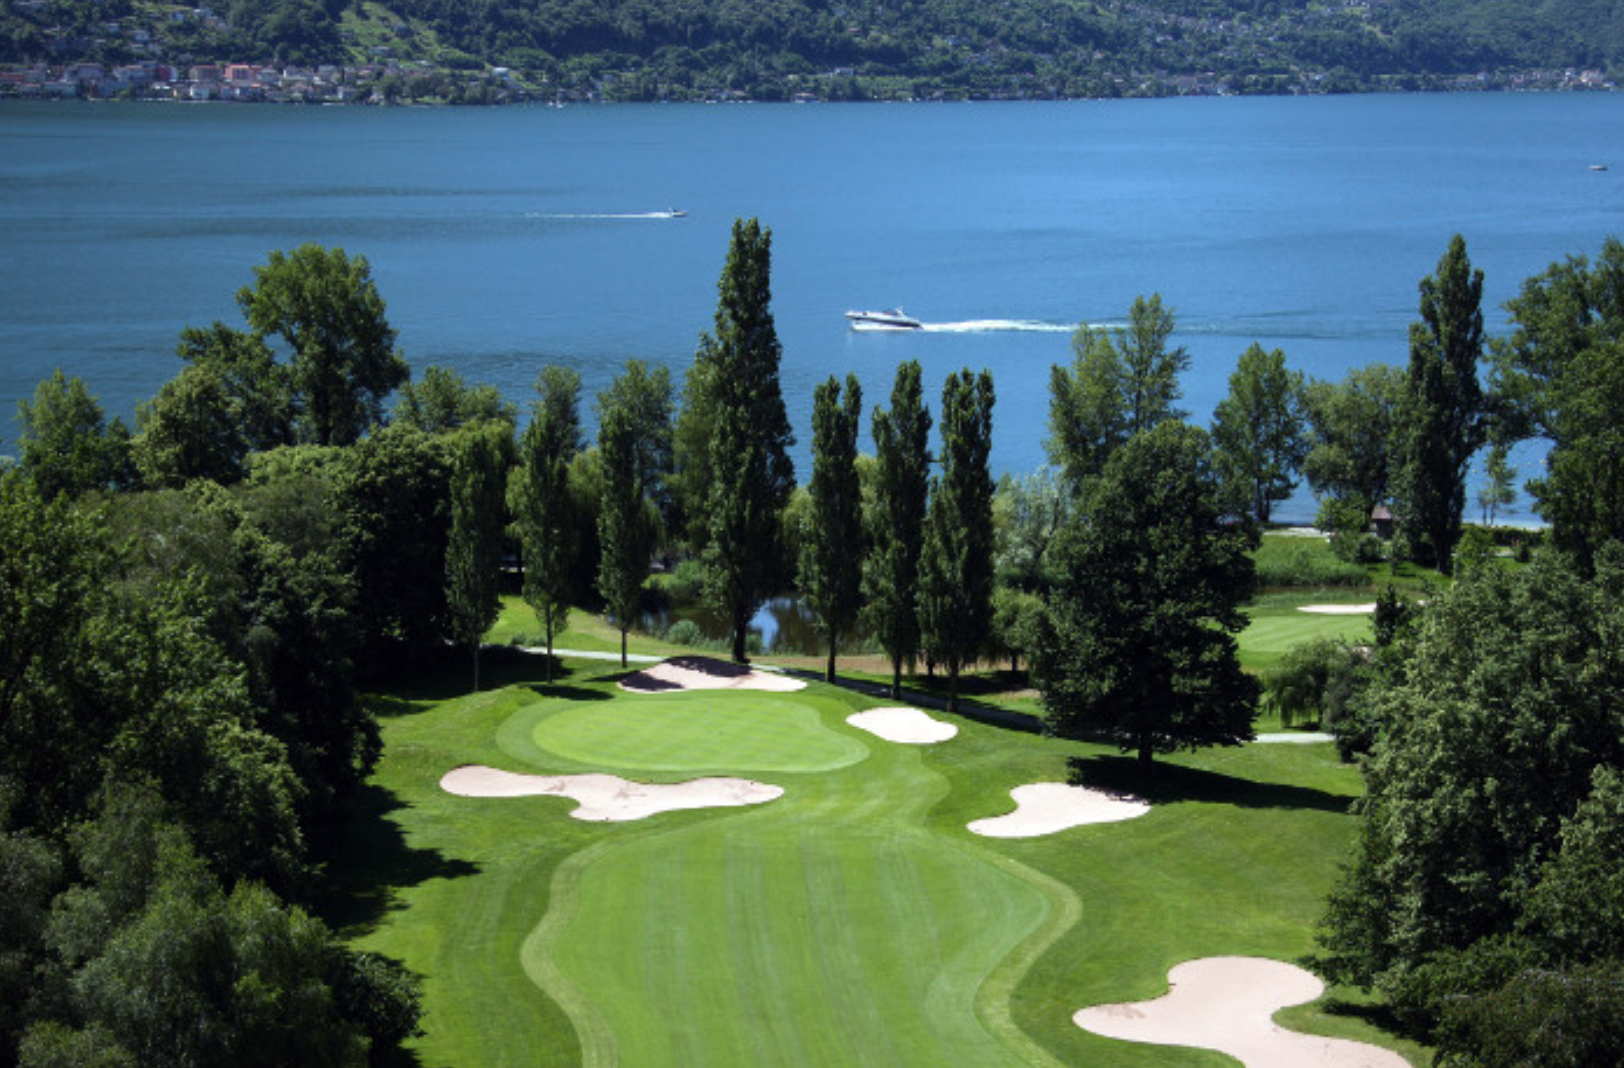 The Golf Club Patriziale Ascona